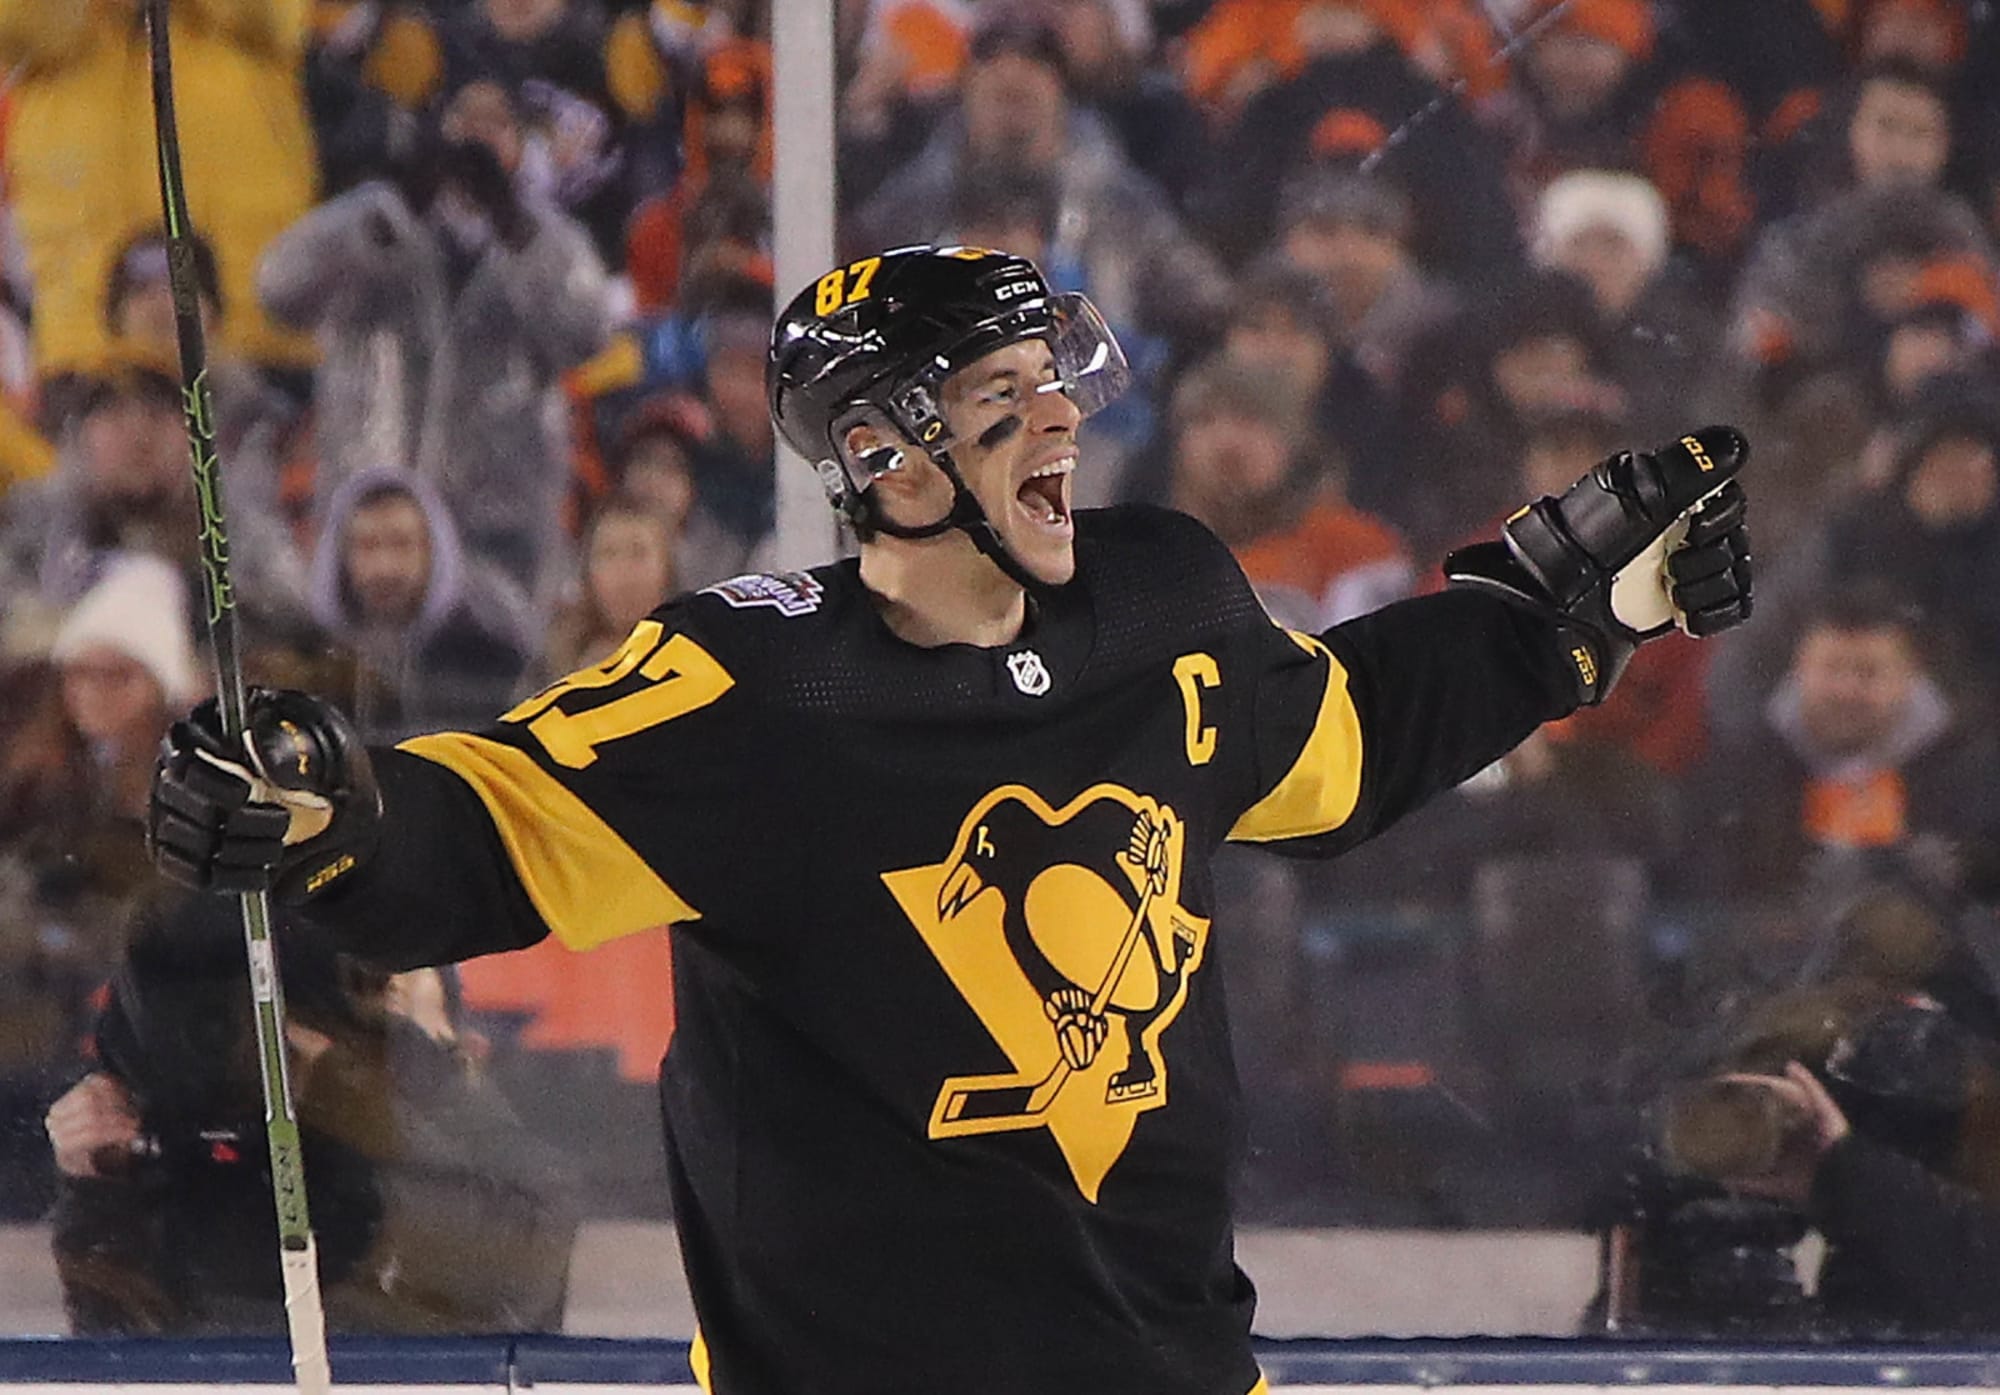 Penguins PR on X: The @penguins' 'Big Three' of Sidney Crosby